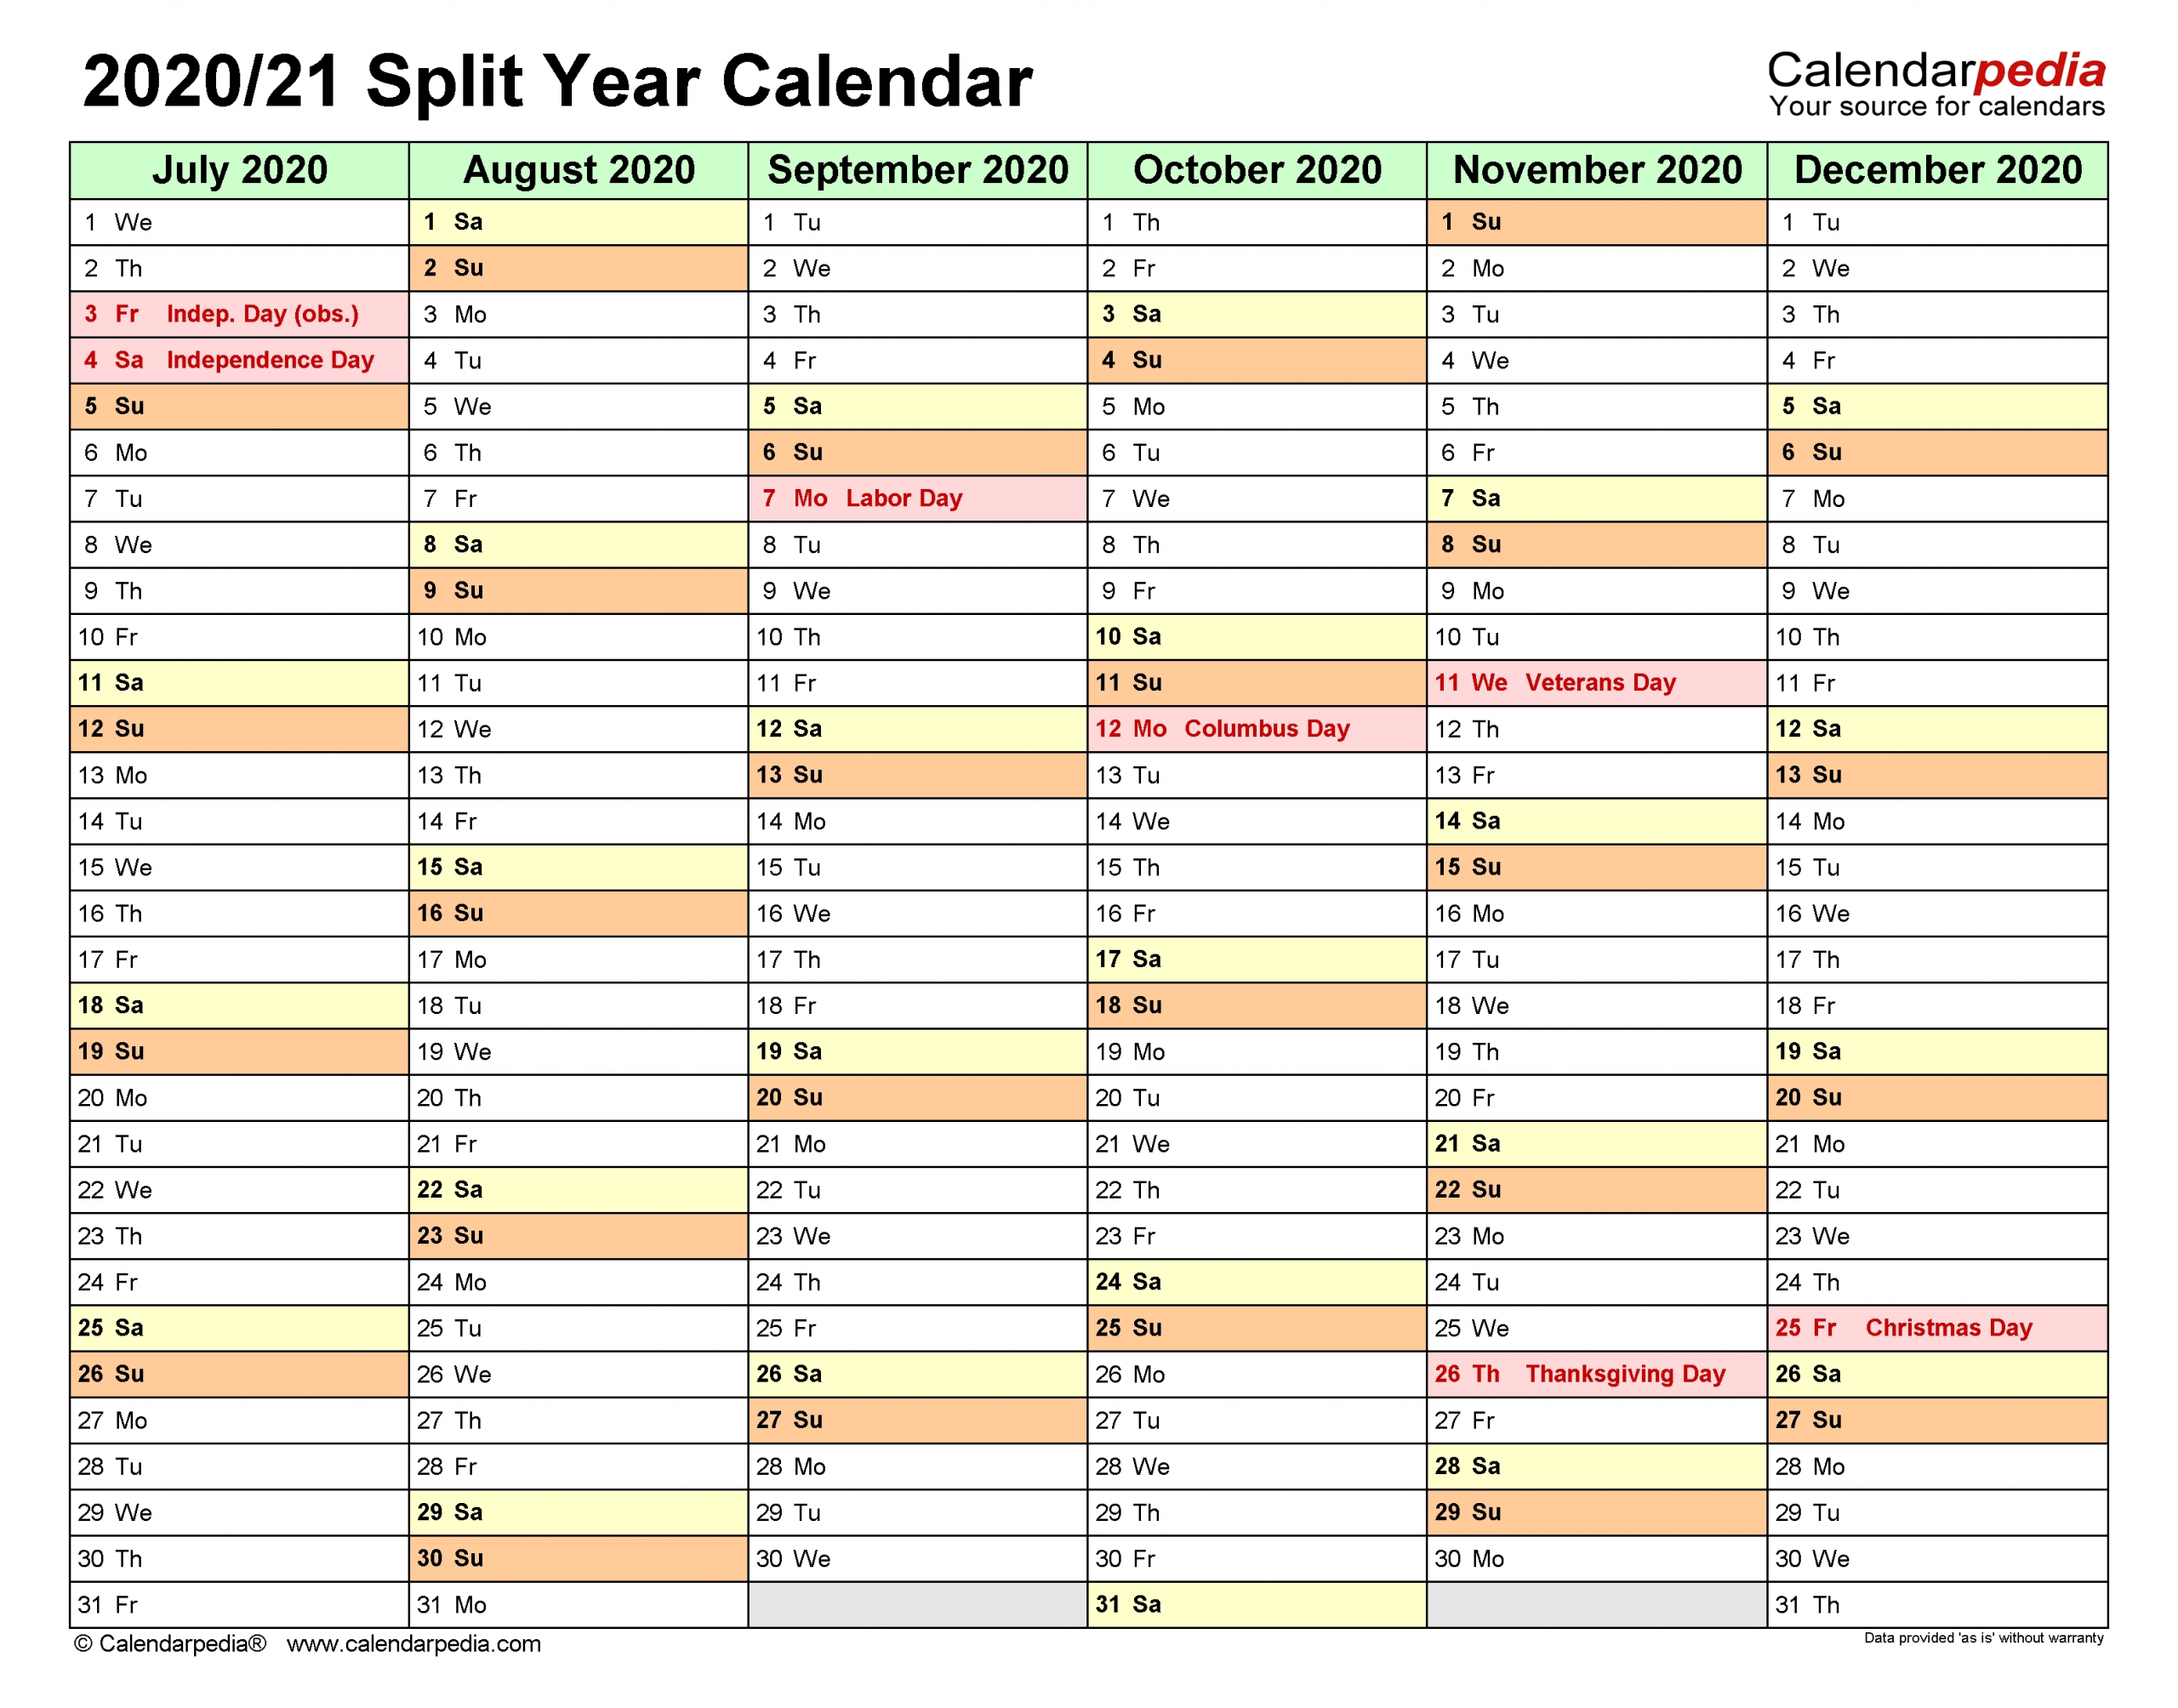 June 2021 Calendar Word Doc | Calendar Template Printable